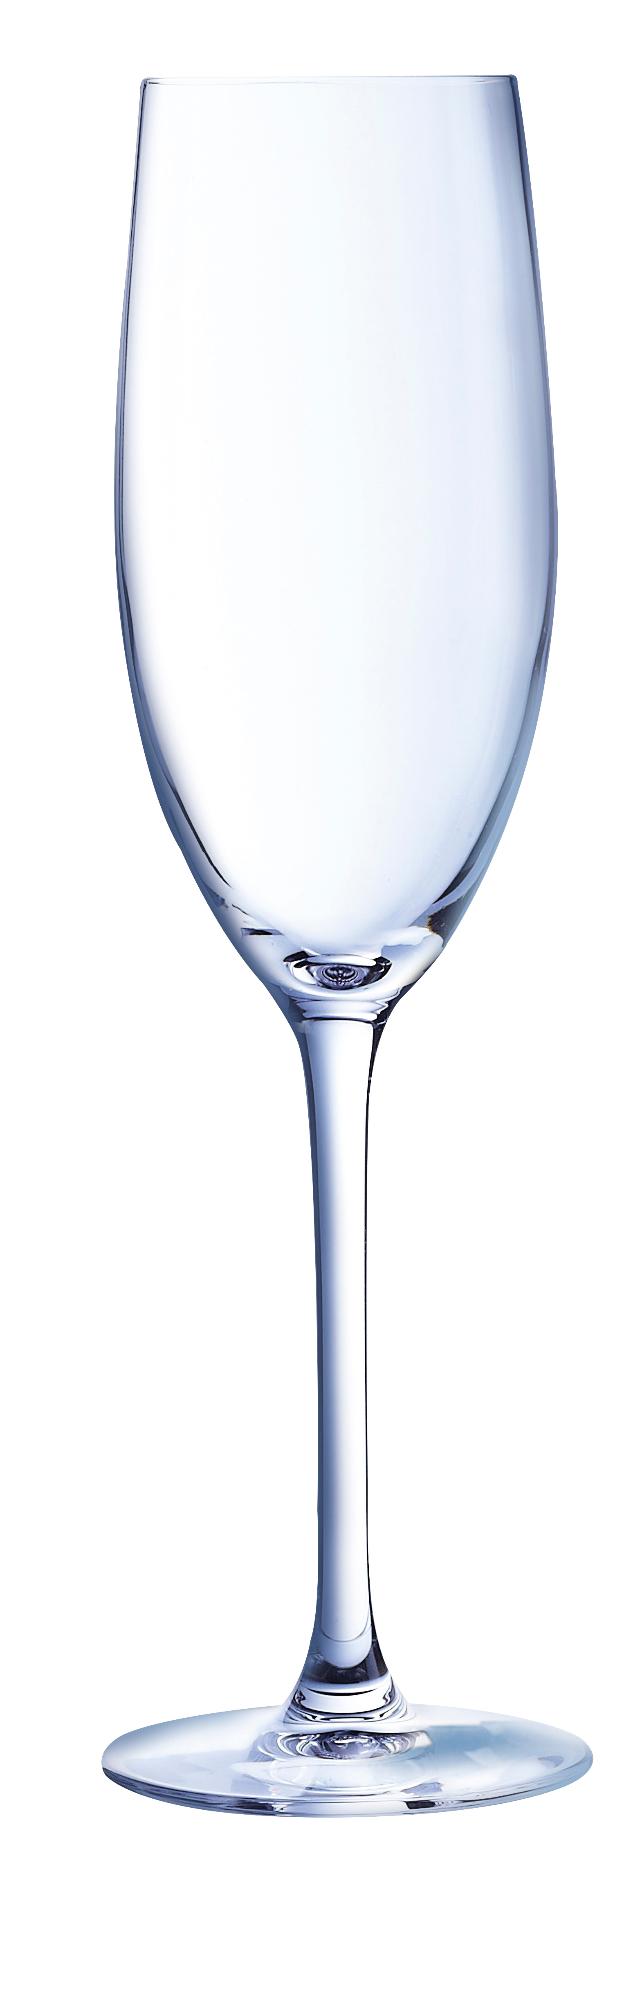 Cabernet champagne glass, 240ml